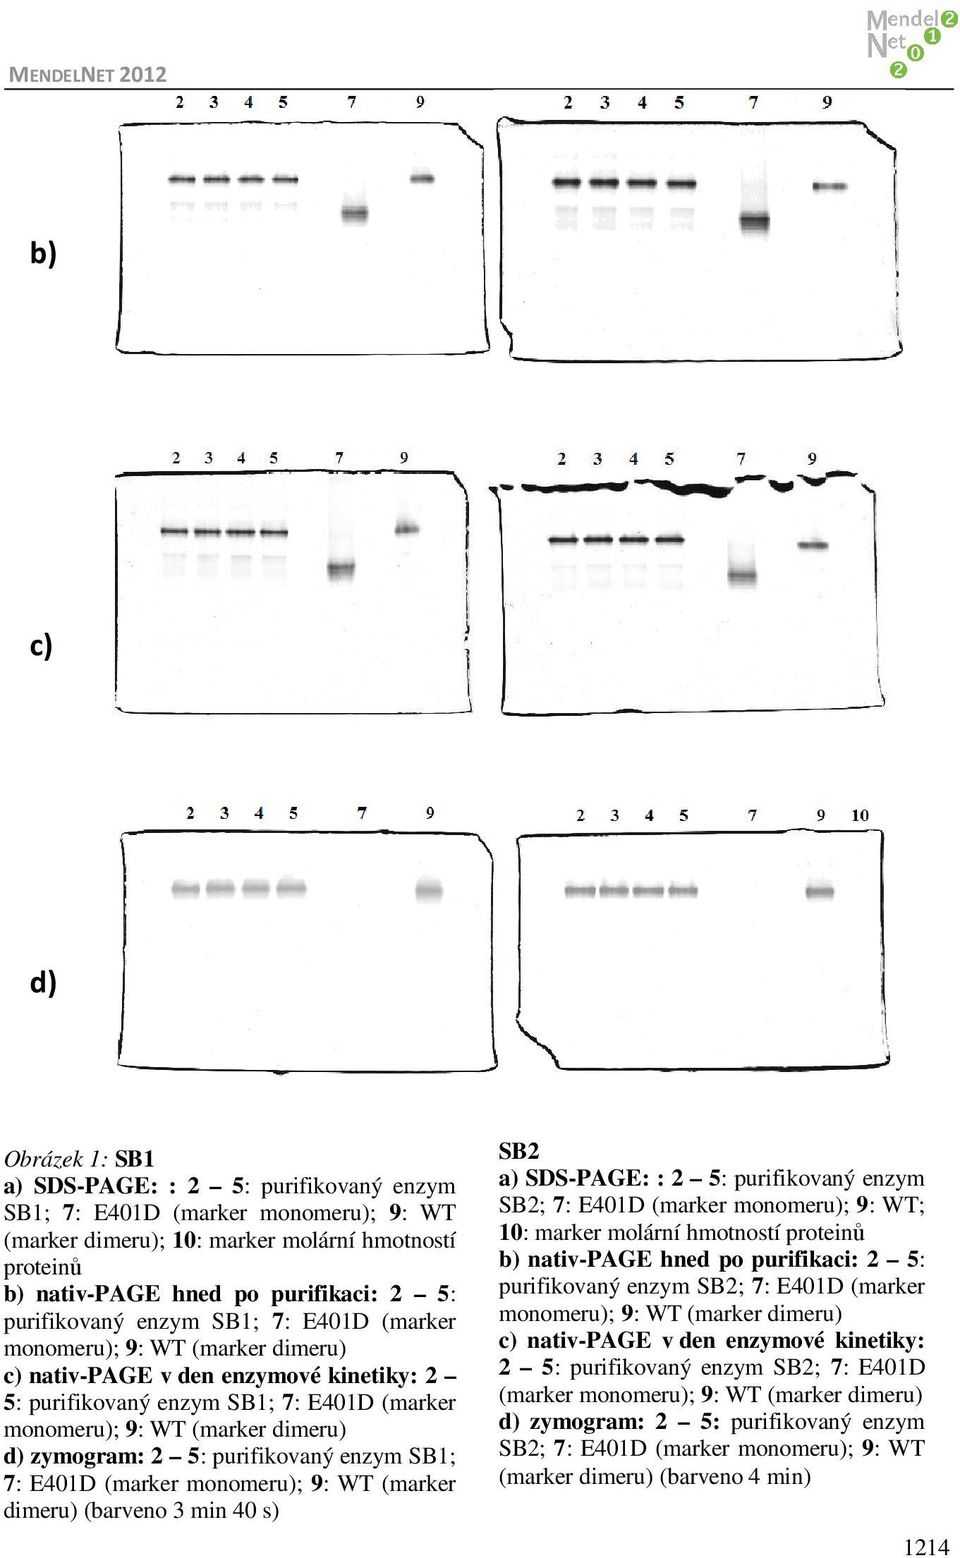 zymogram: 2 5: purifikovaný enzym SB1; 7: E401D (marker monomeru); 9: WT (marker dimeru) (barveno 3 min 40 s) SB2 a) SDS-PAGE: : 2 5: purifikovaný enzym SB2; 7: E401D (marker monomeru); 9: WT; 10: